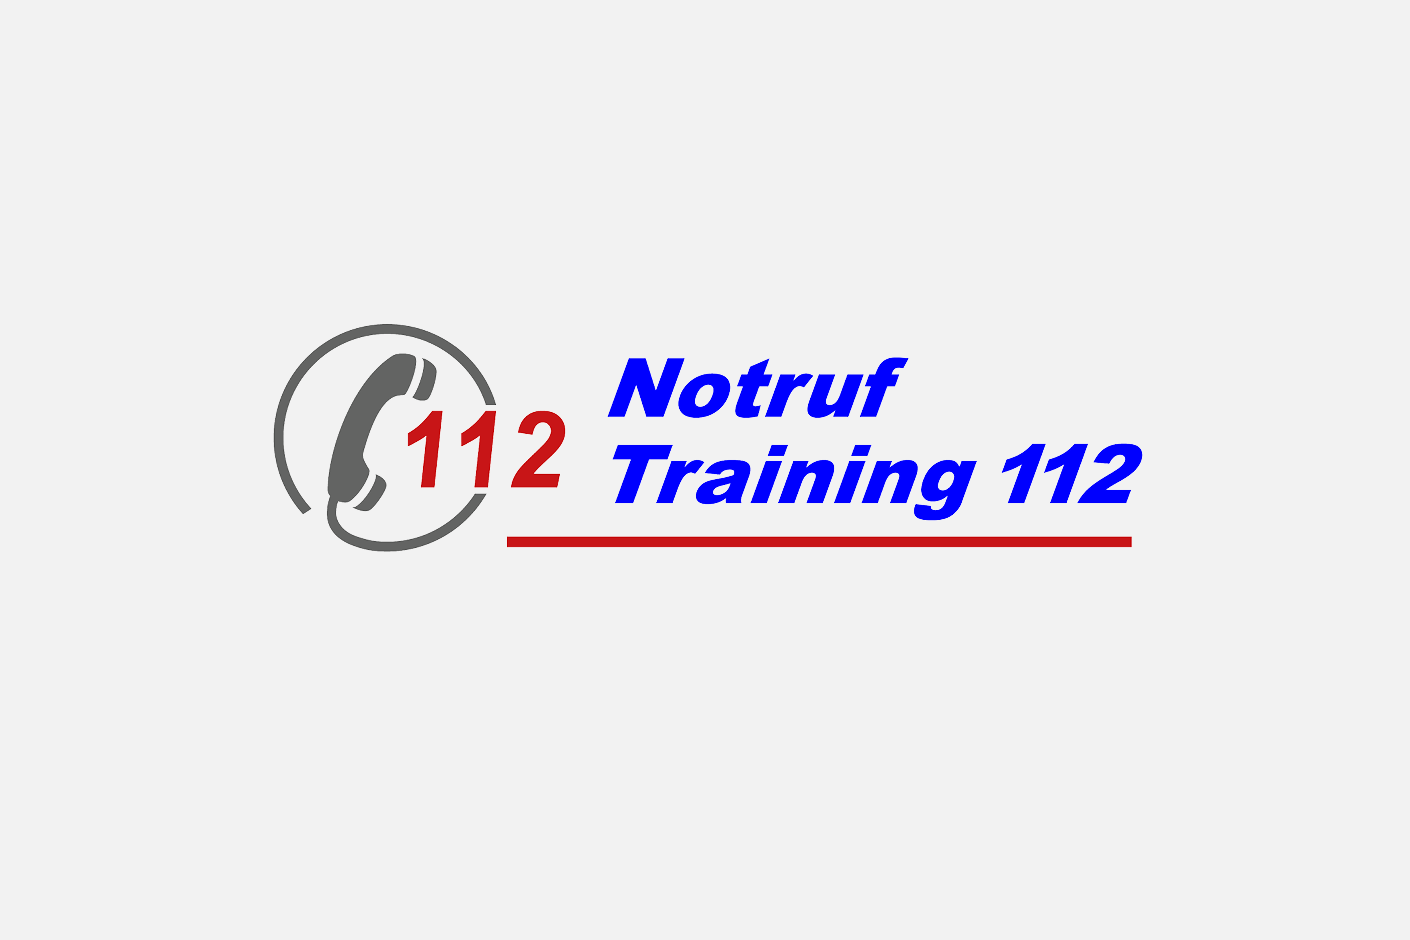 Notruf Training 112